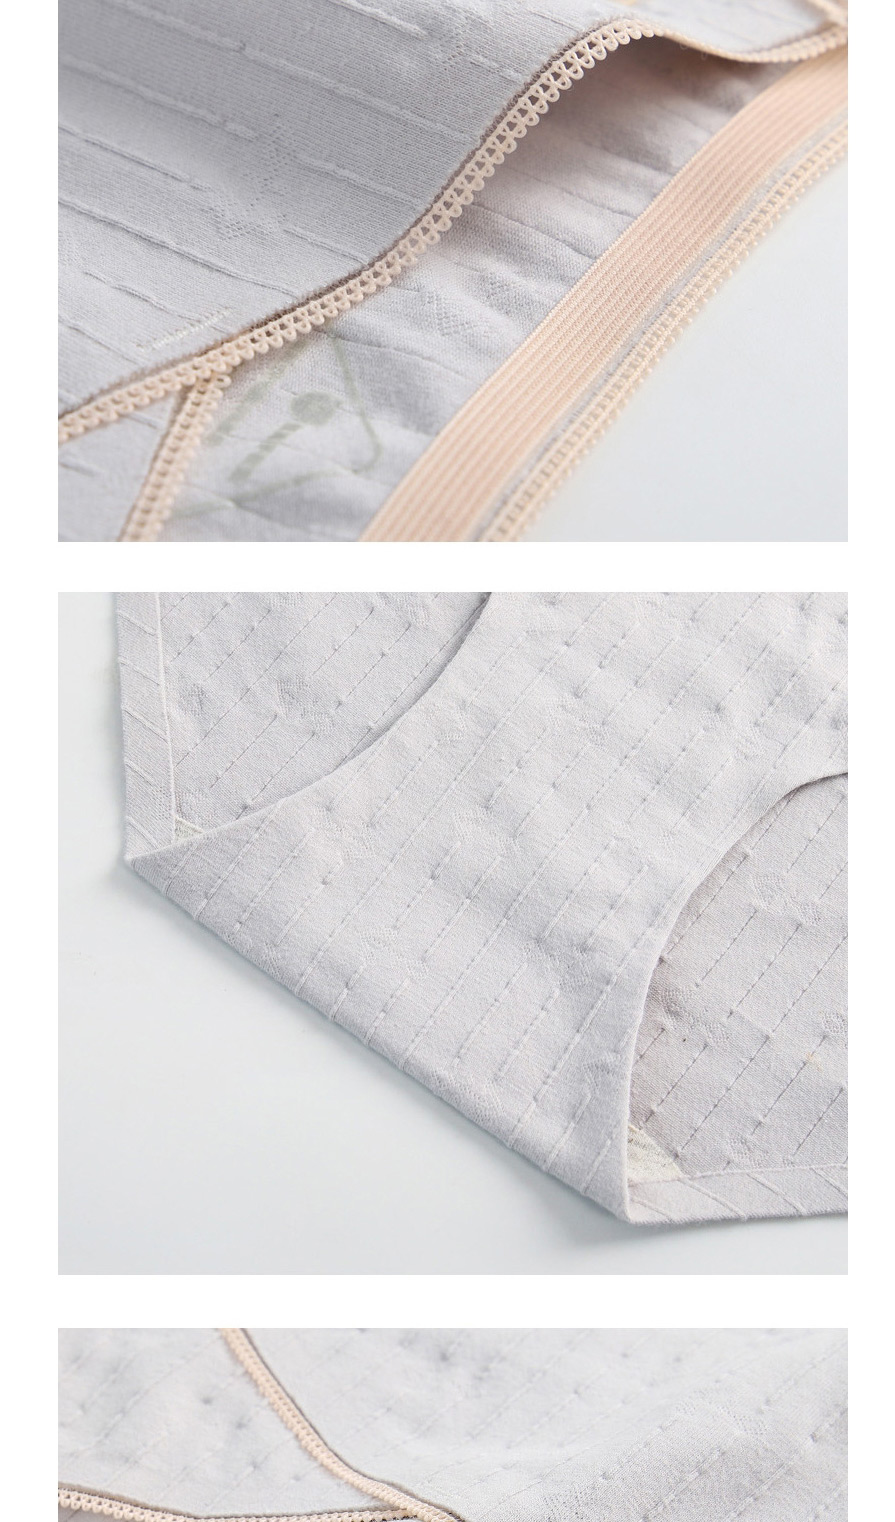 Fashion Skin Tone (stitching Lace) Low-rise Belly Lift Cotton Maternity Panties,SLEEPWEAR & UNDERWEAR